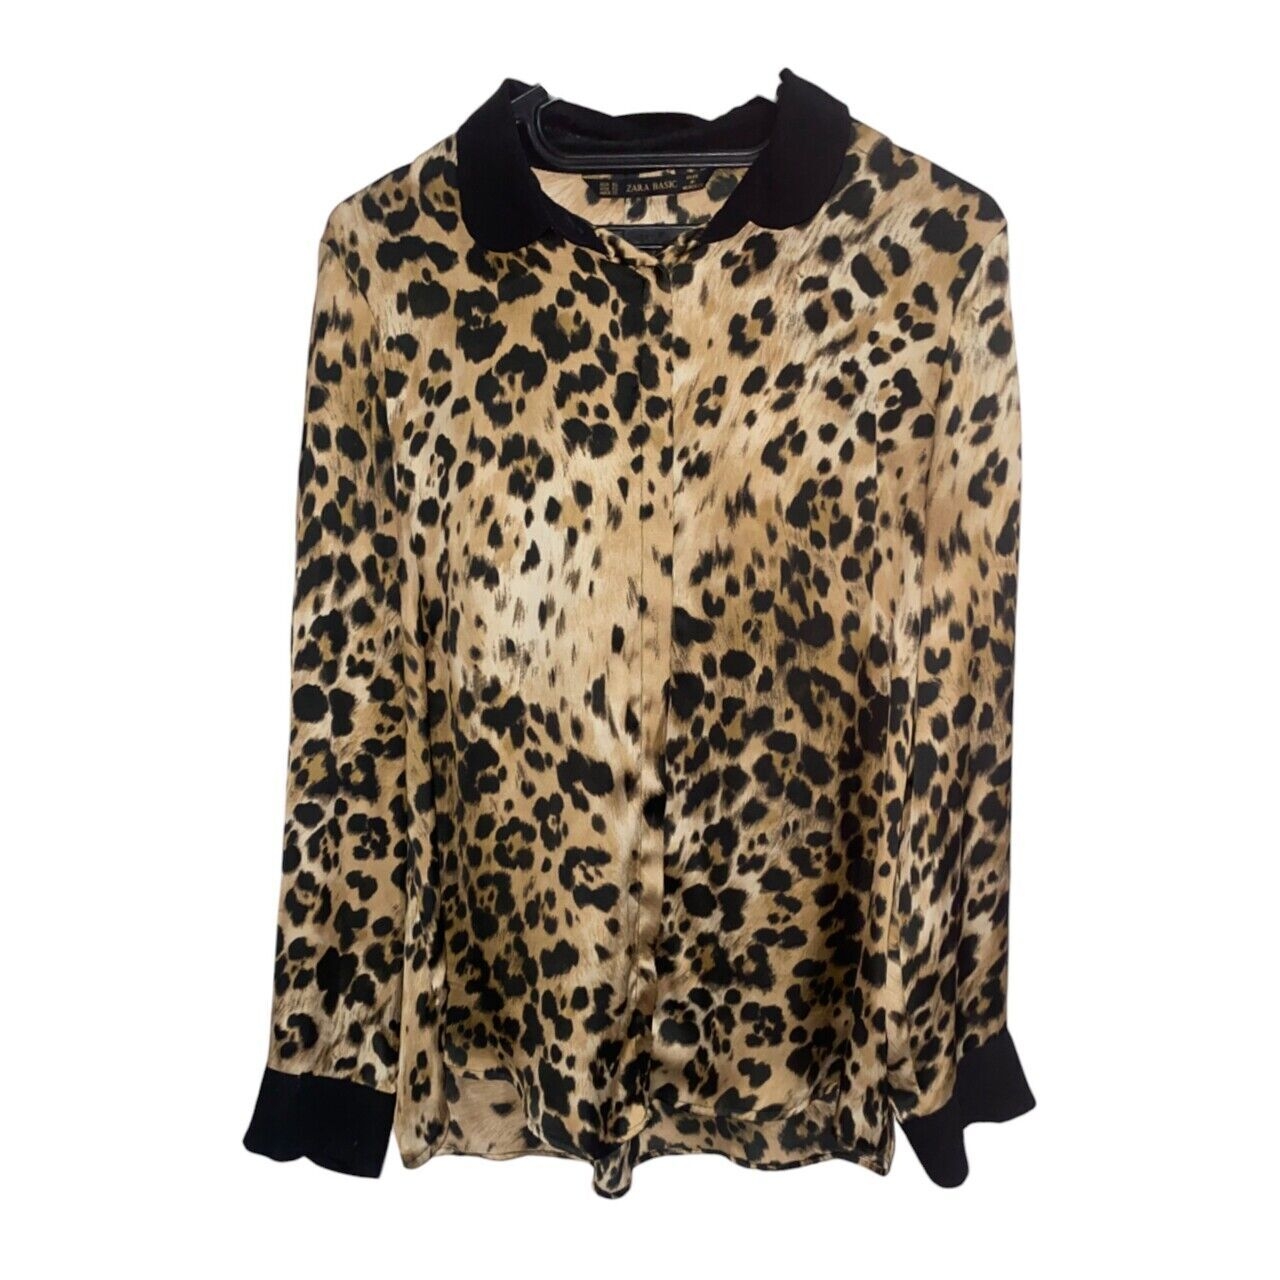 Zara Brown & Black Leopard Shirt